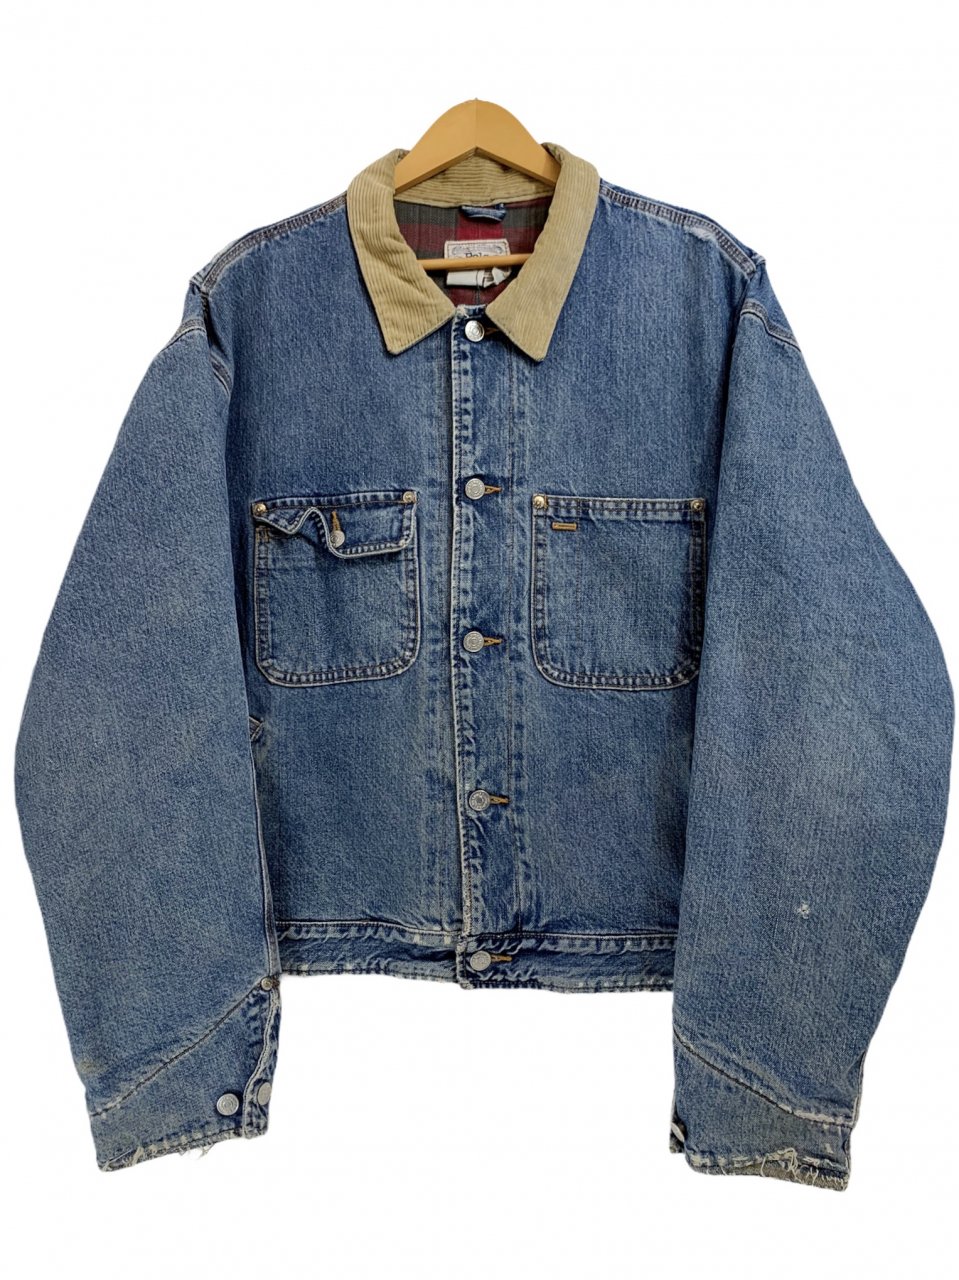 USA製 80s Polo Ralph Lauren Flannel Lined Denim Jacket 青 L 白タグ